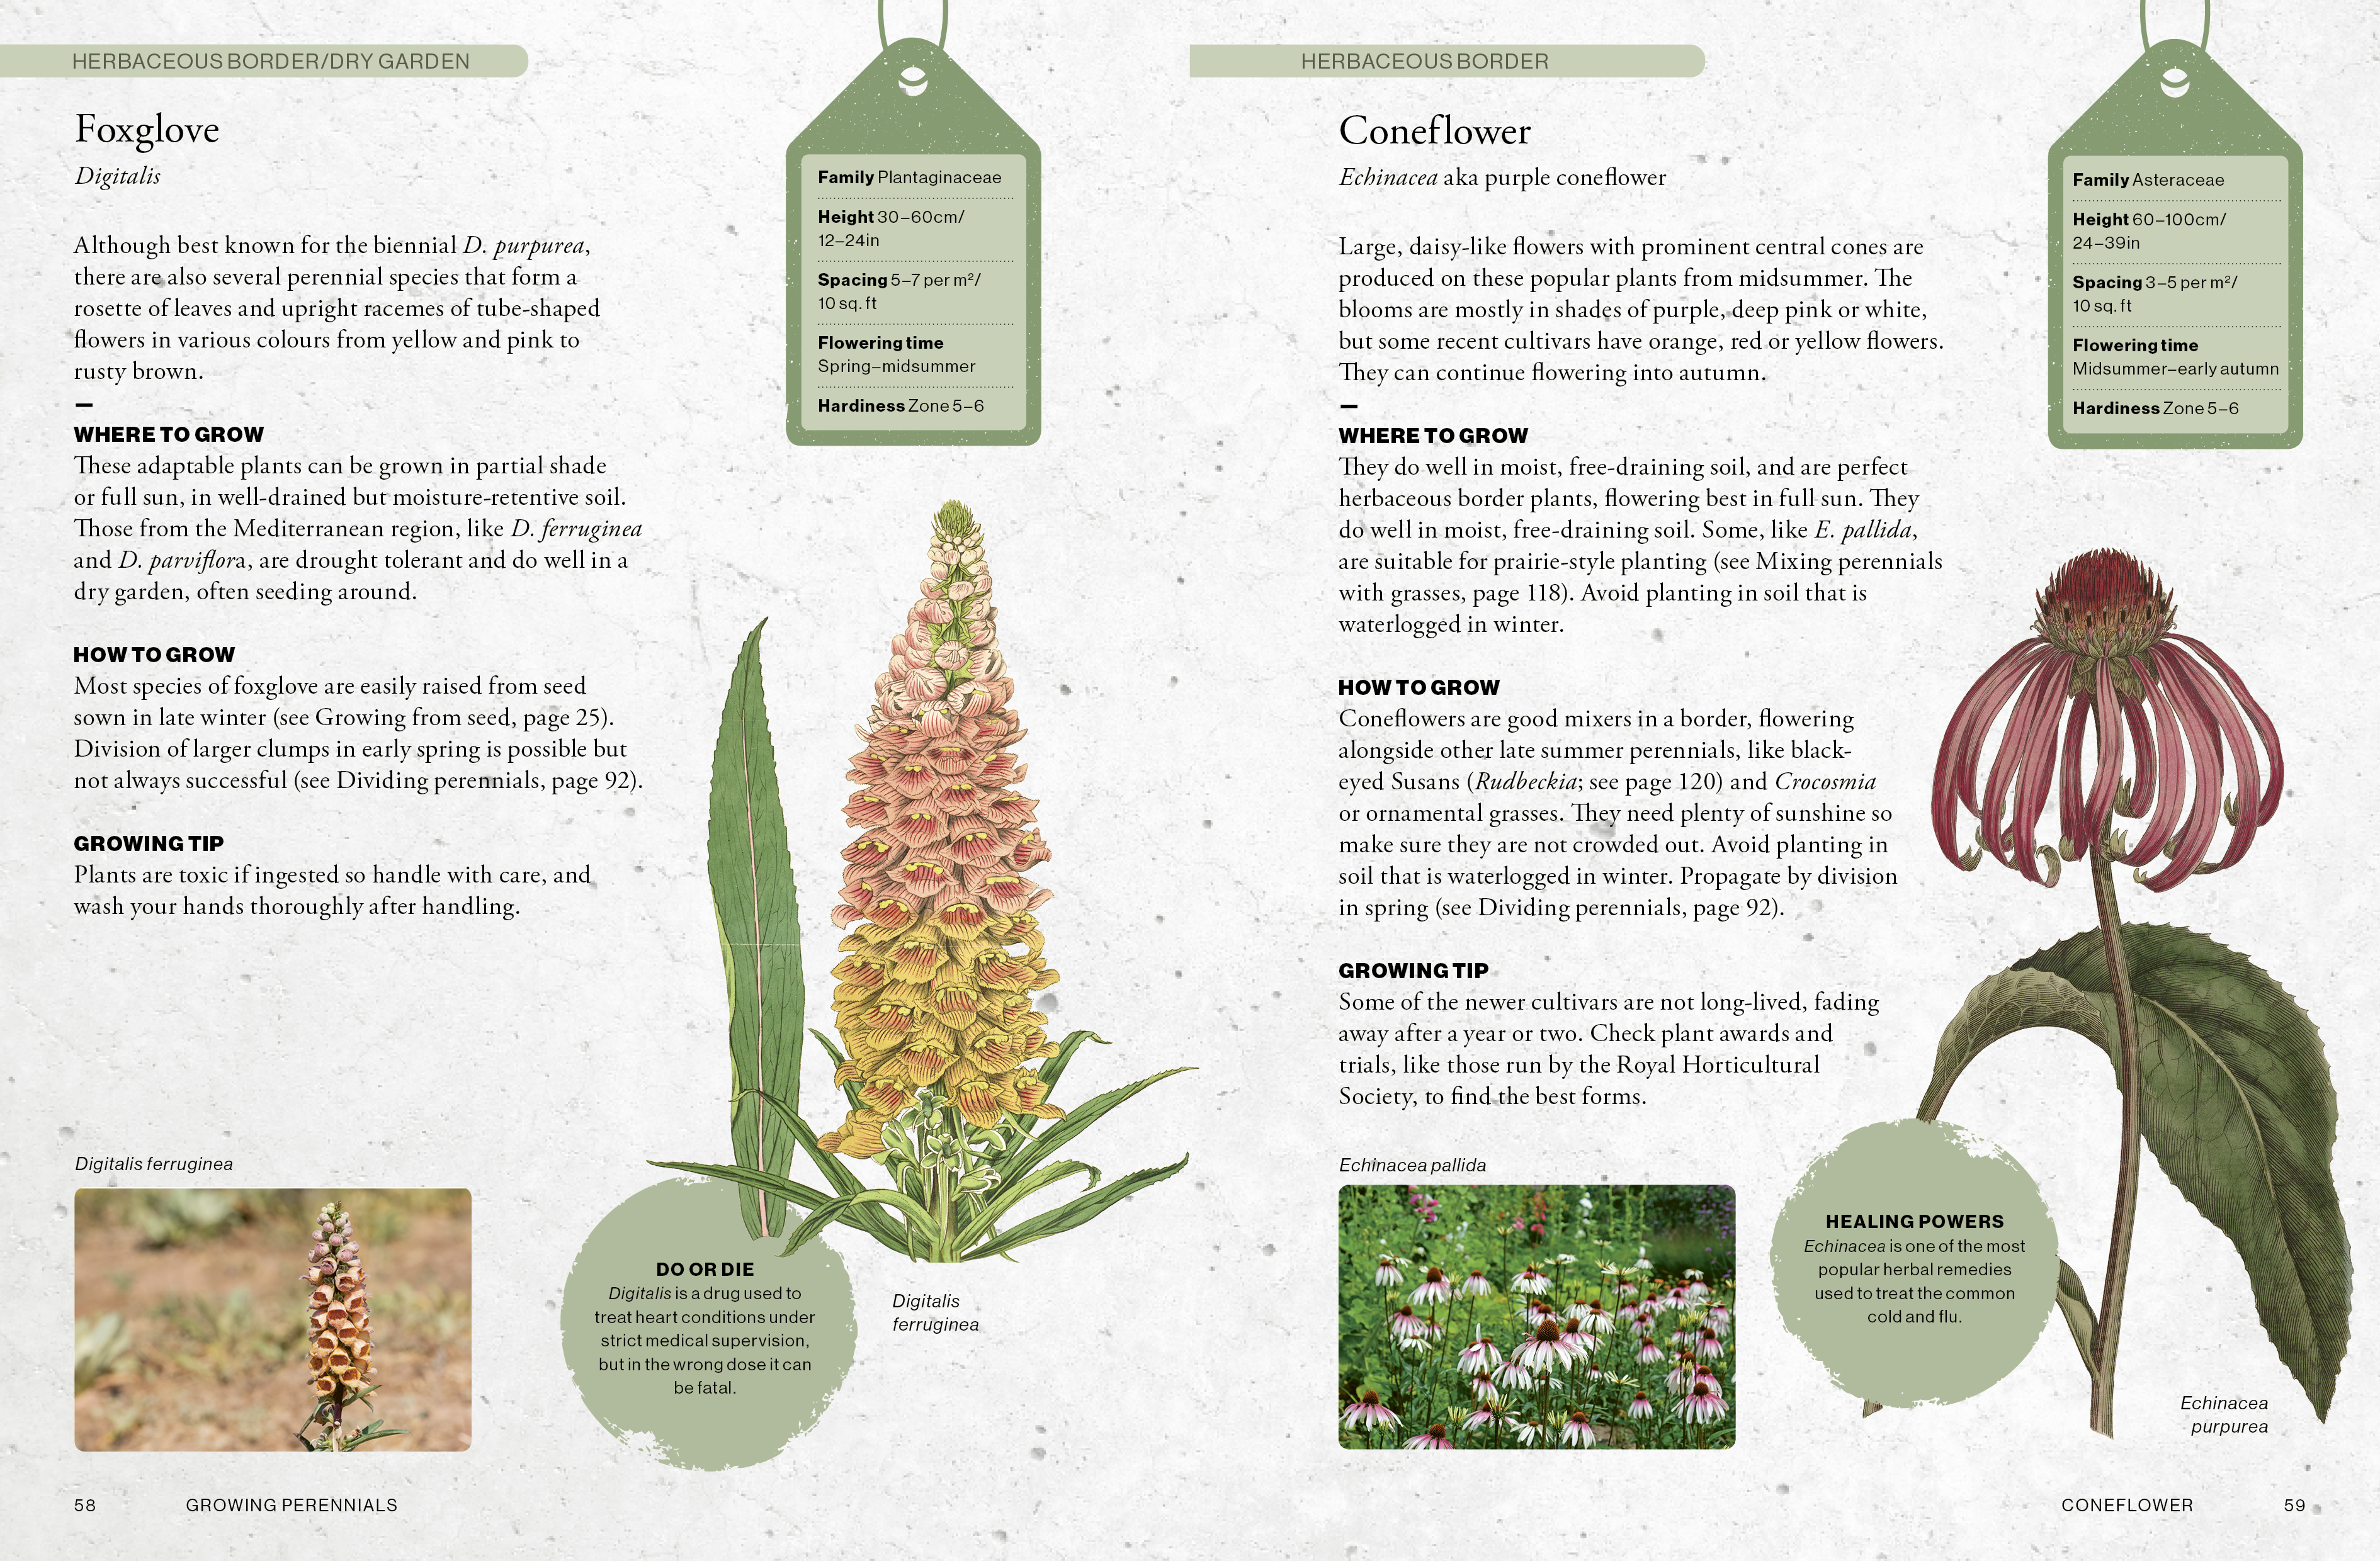 The Kew Gardener's Guide to Growing Perennials